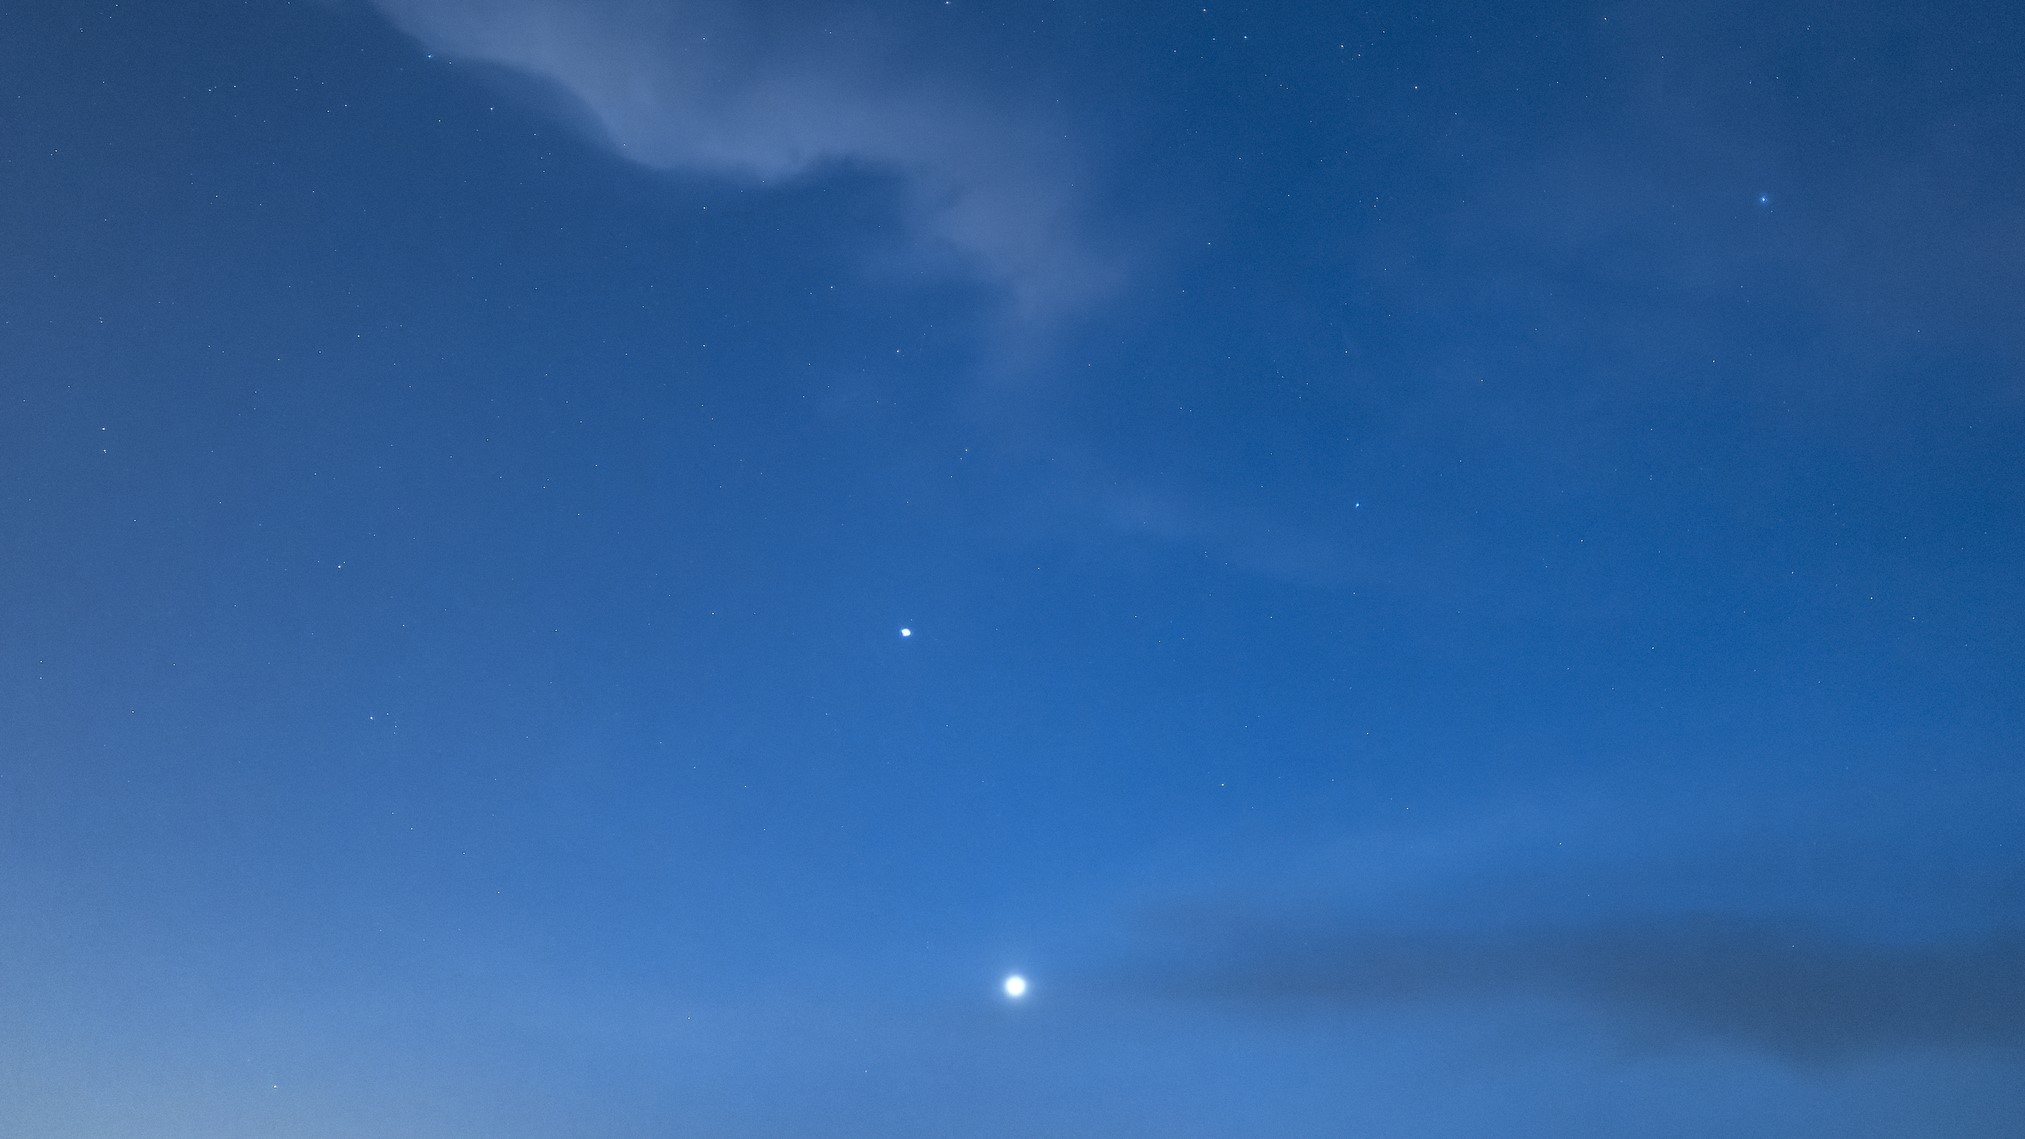 Темно-синее небо с пушистыми облаками и двумя яркими точками света: Венера и Меркурий.